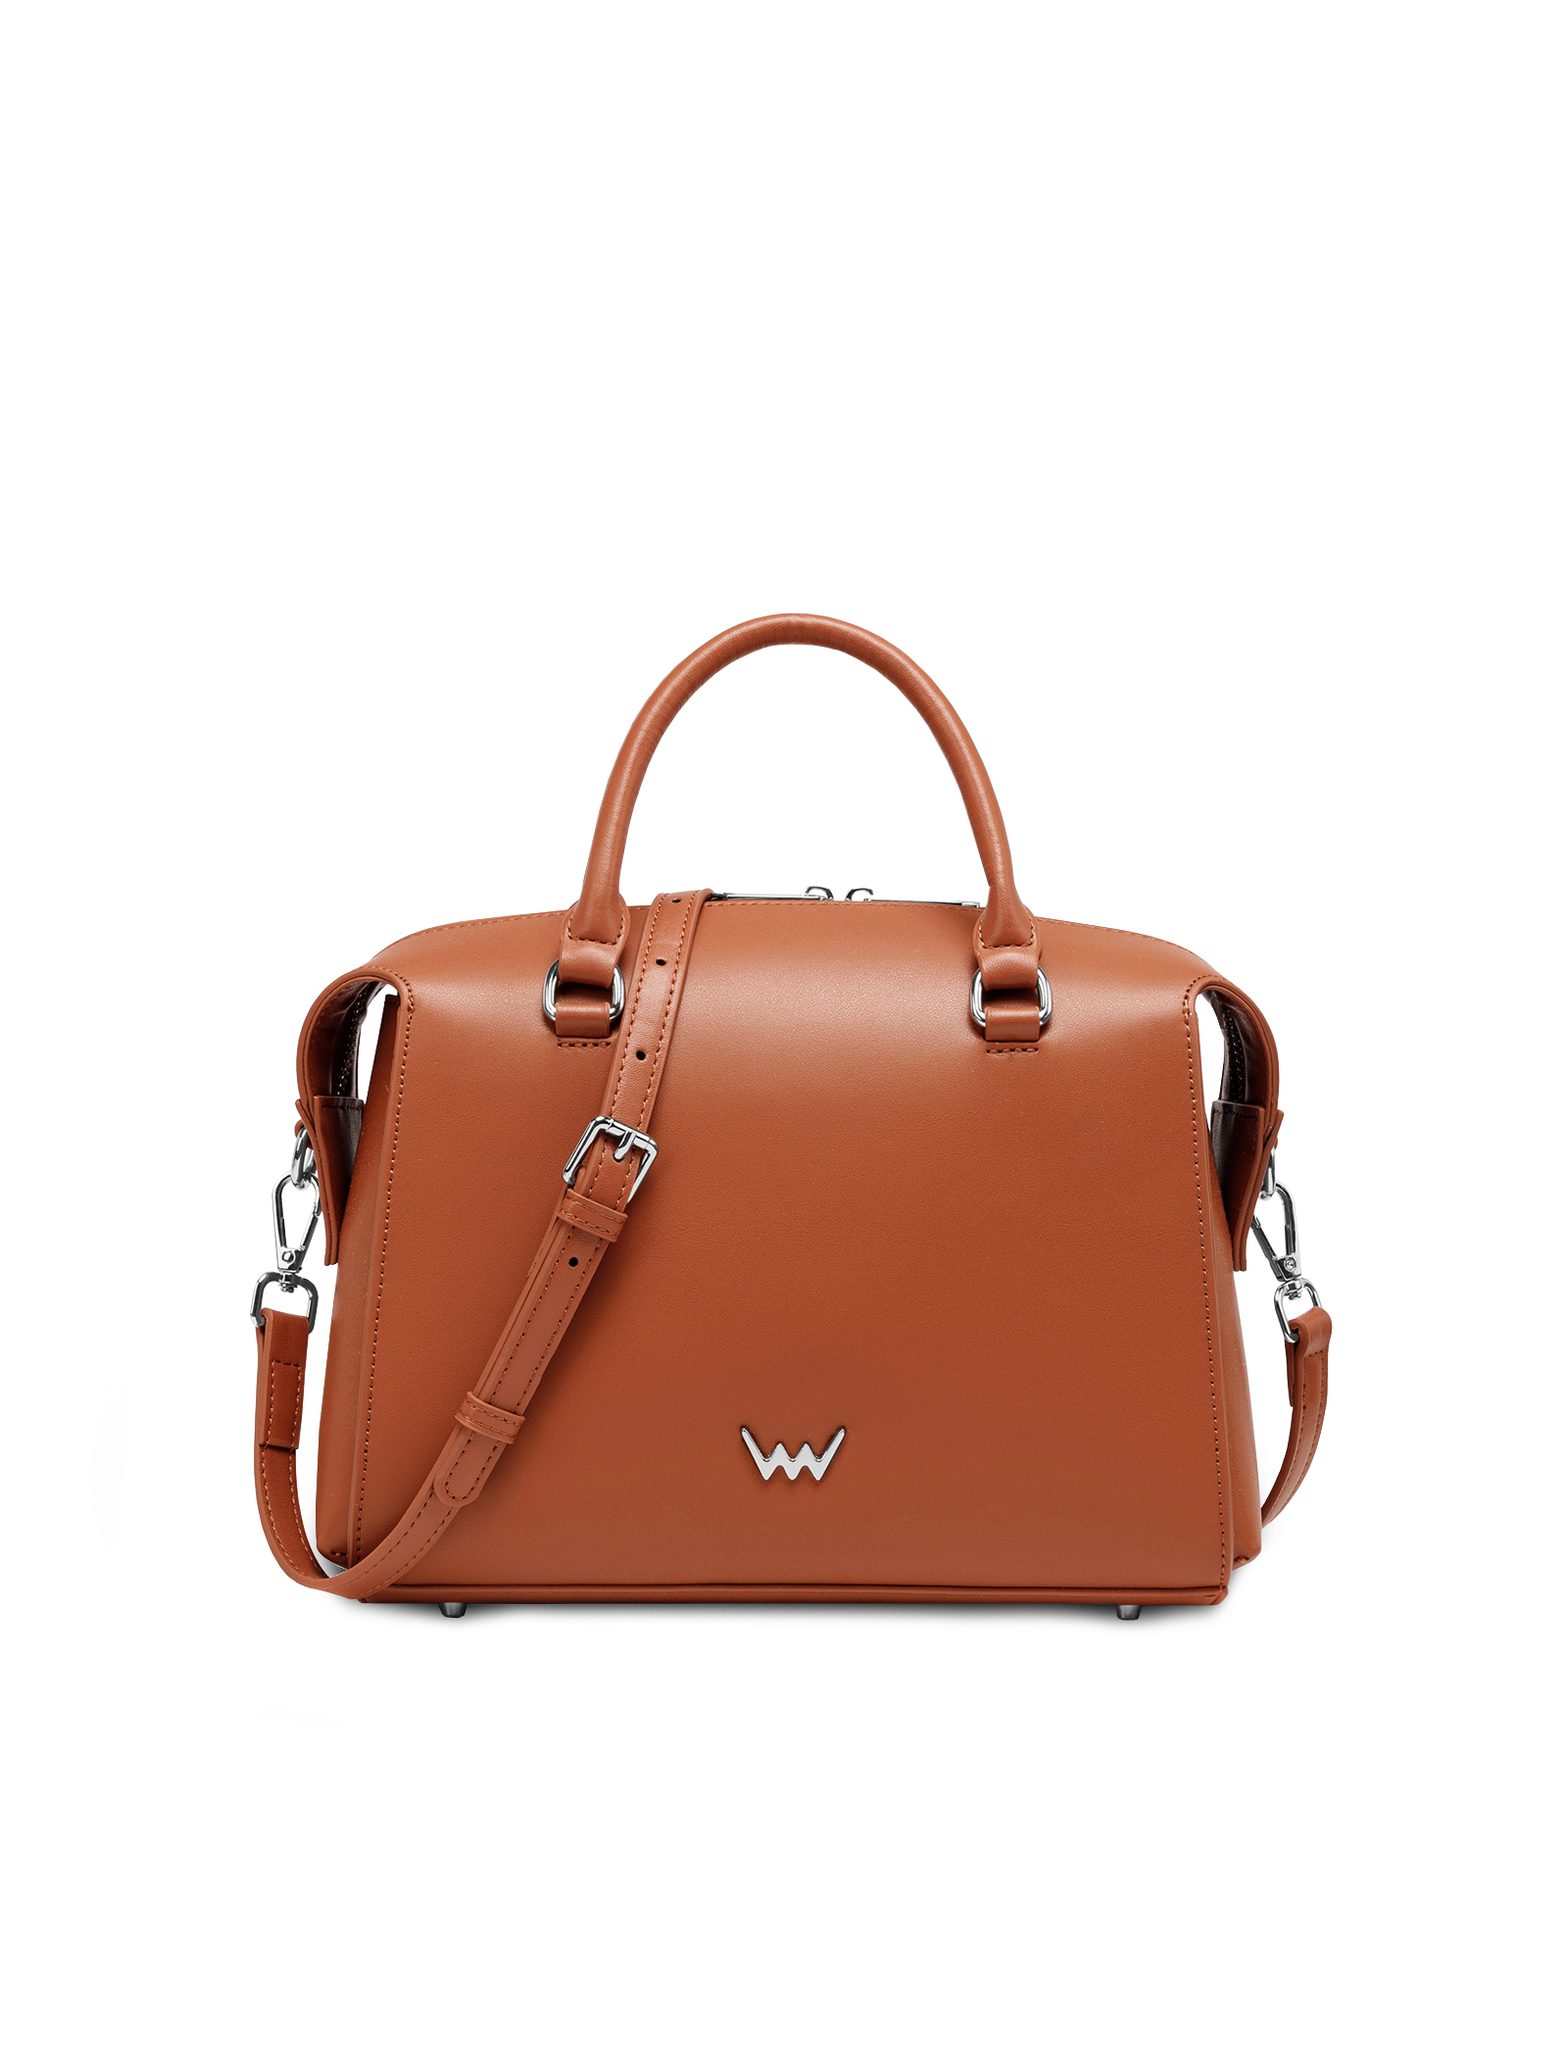 Handbag VUCH Coraline Brown